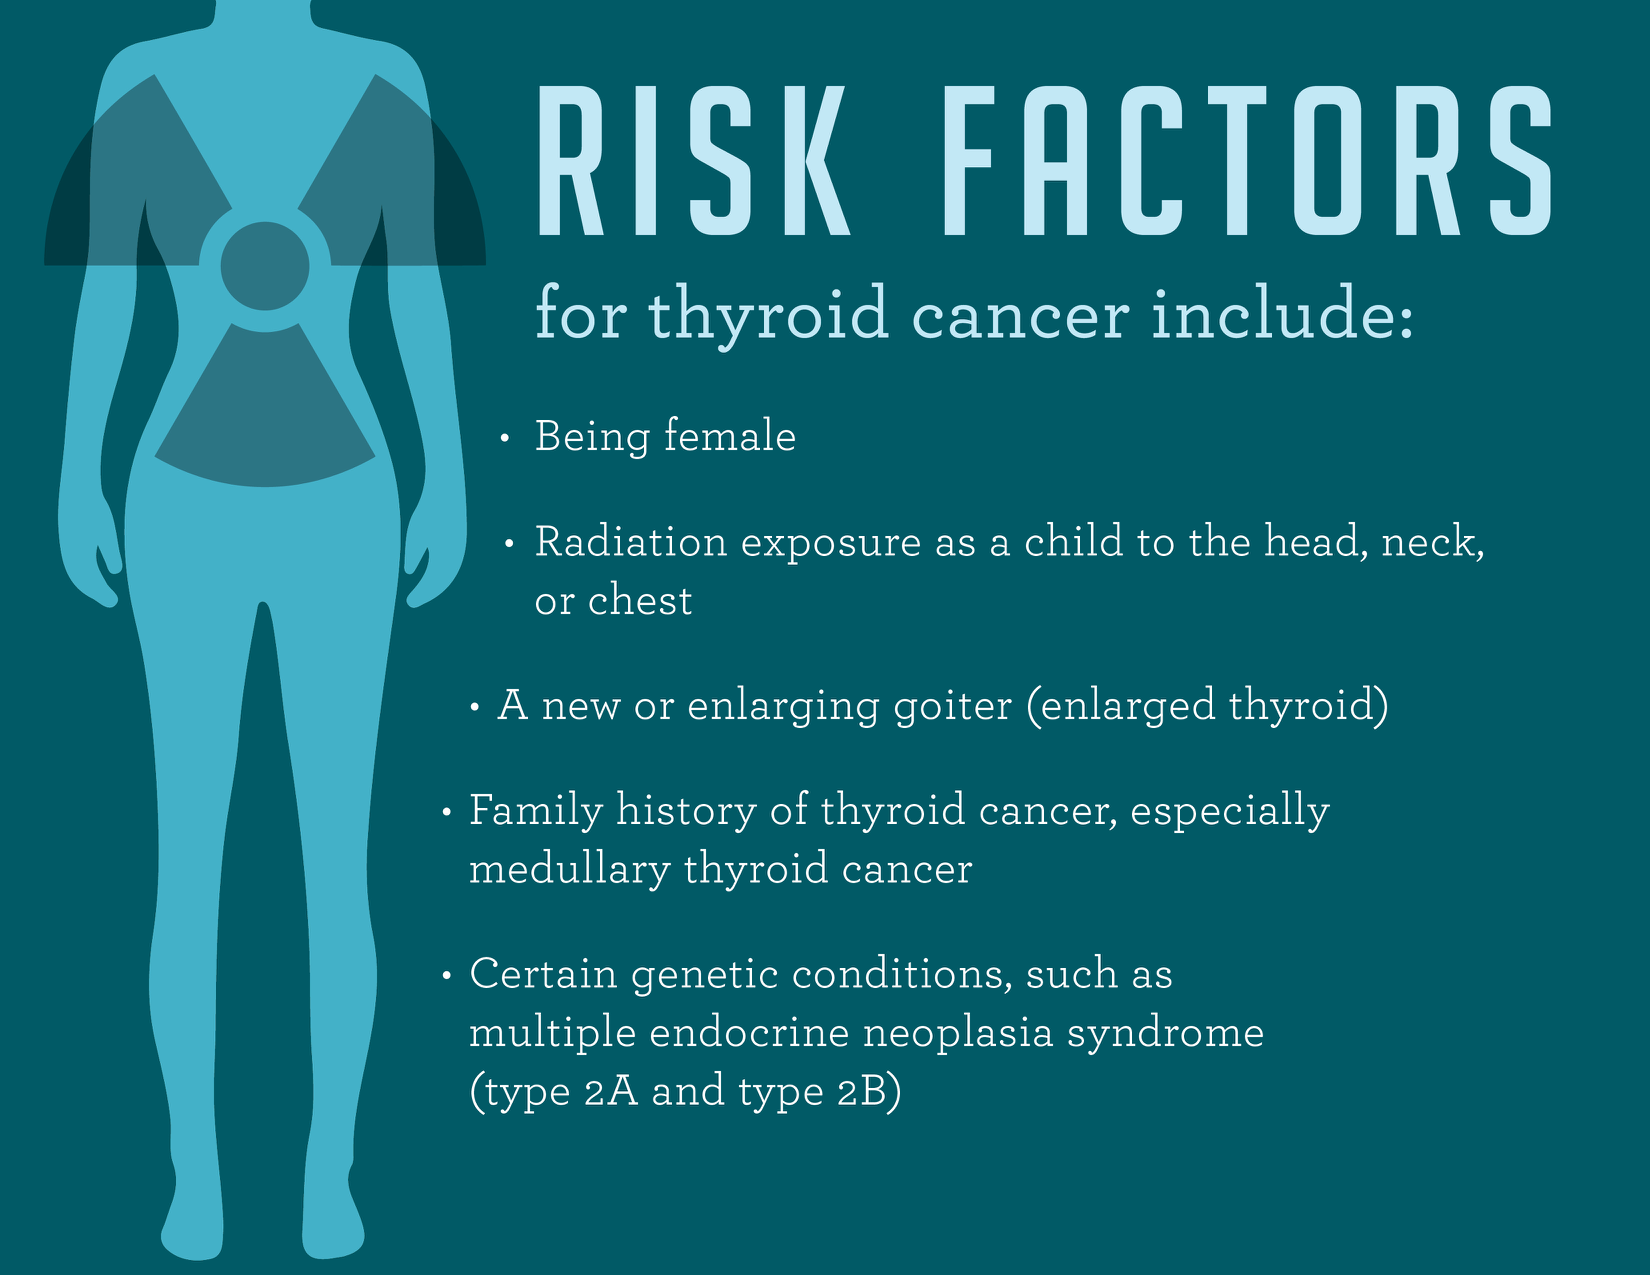 Diseases of thyroid function: Hypothyroidism